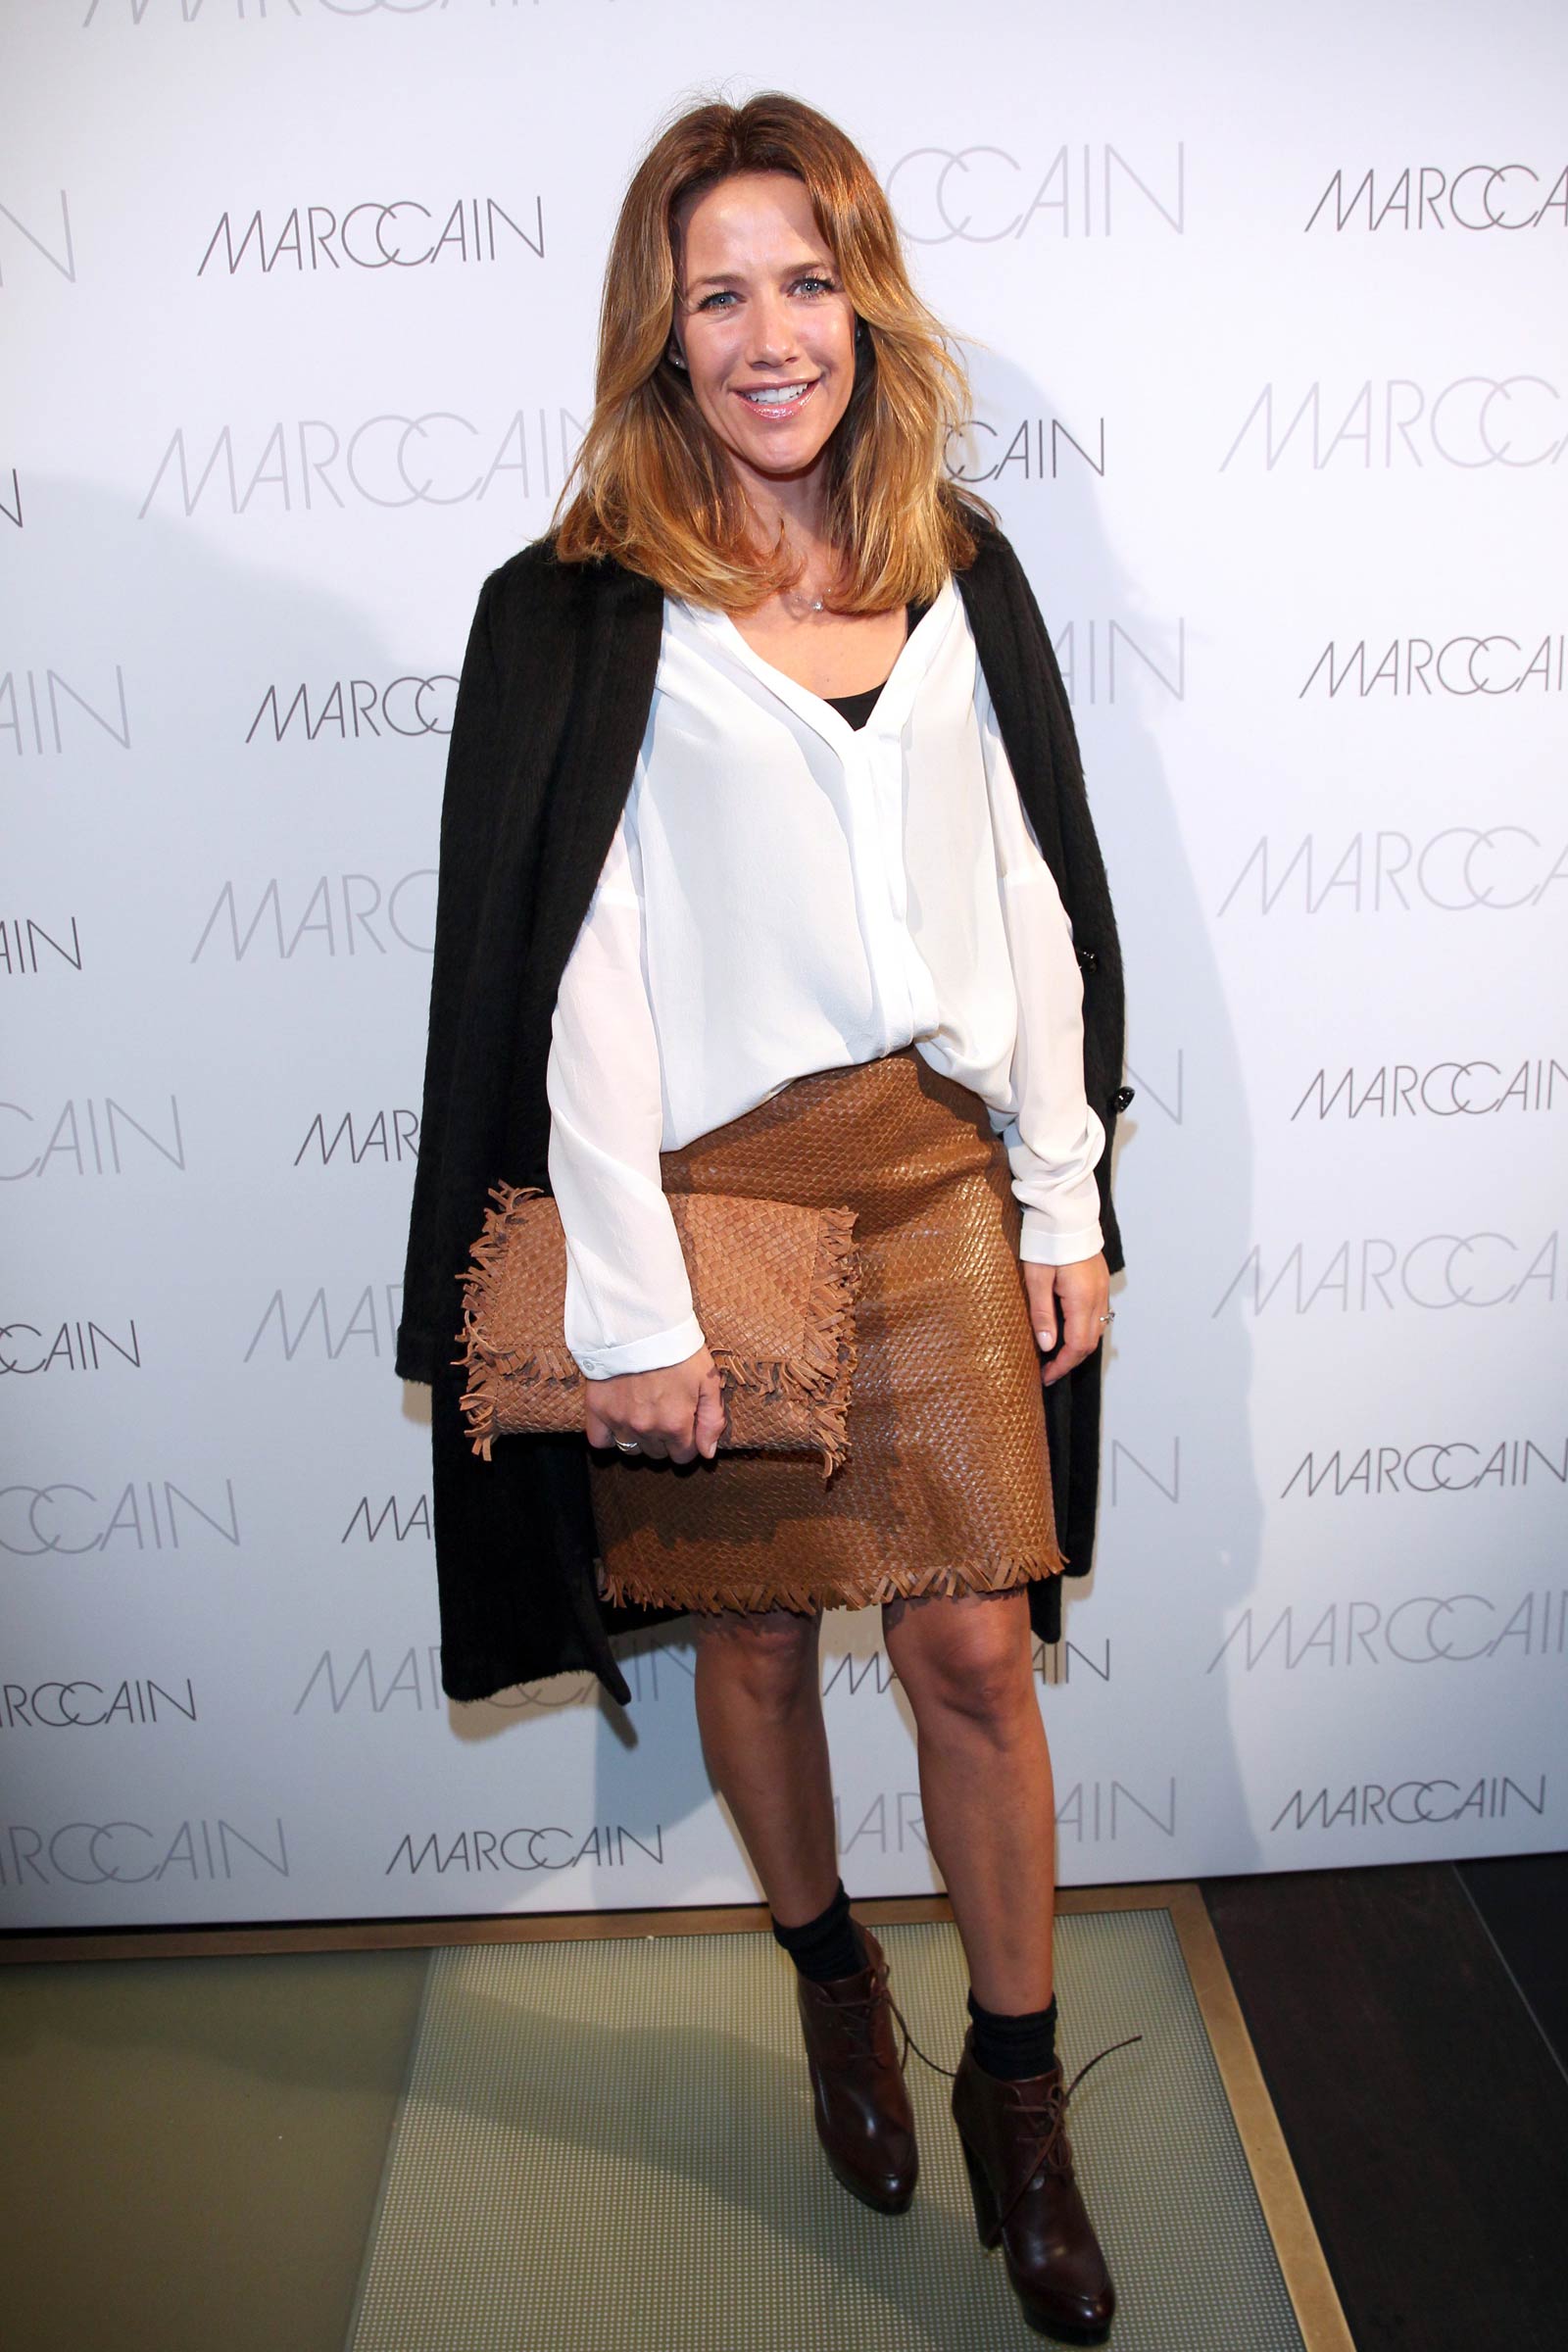 Alexandra Neldel attends MBFW-Marc Cain Fashion Show